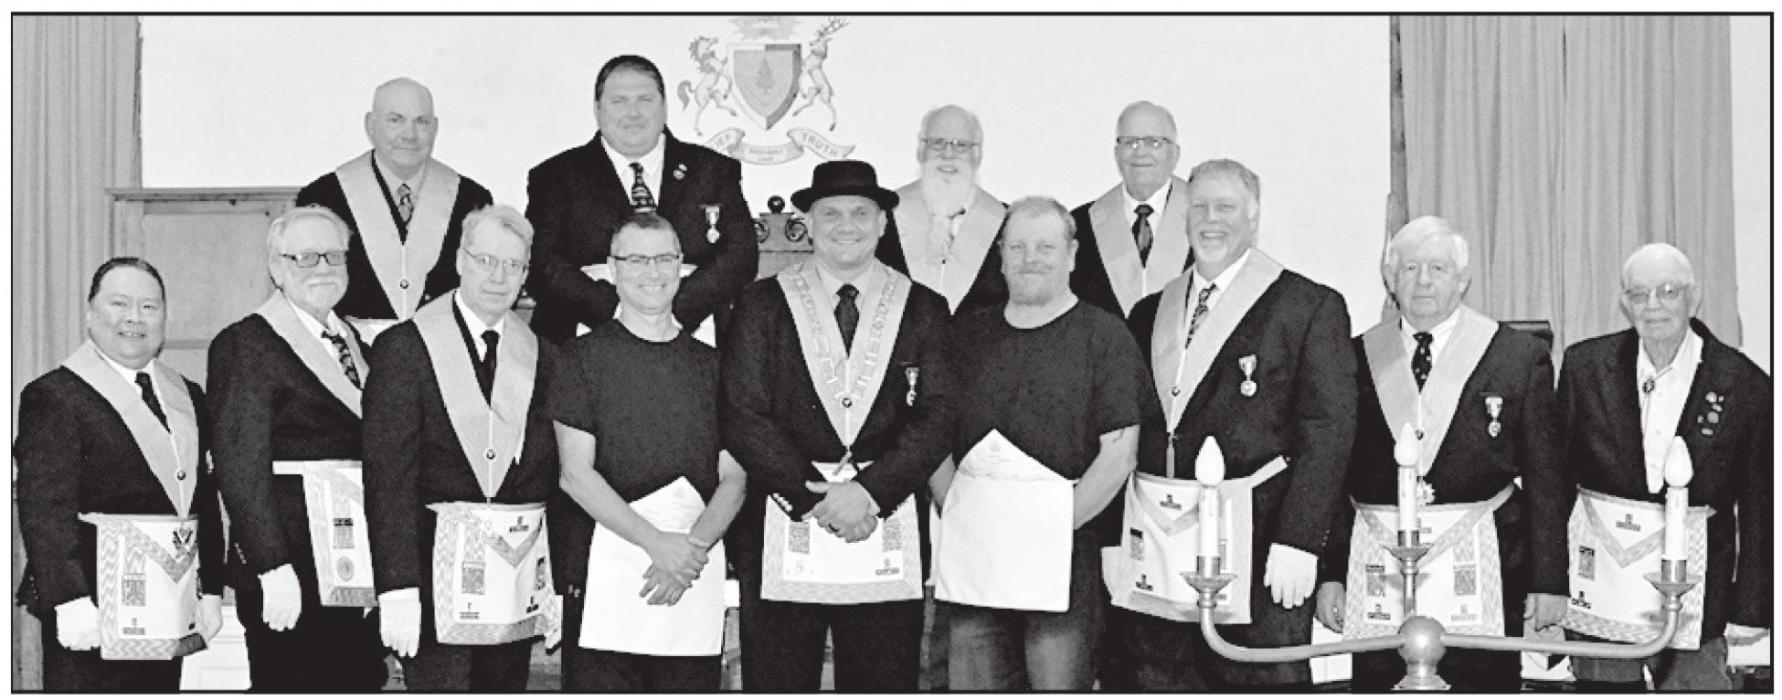 Long Pine Masonic Lodge No. 136 Initiates New Member and Presents Scholarships